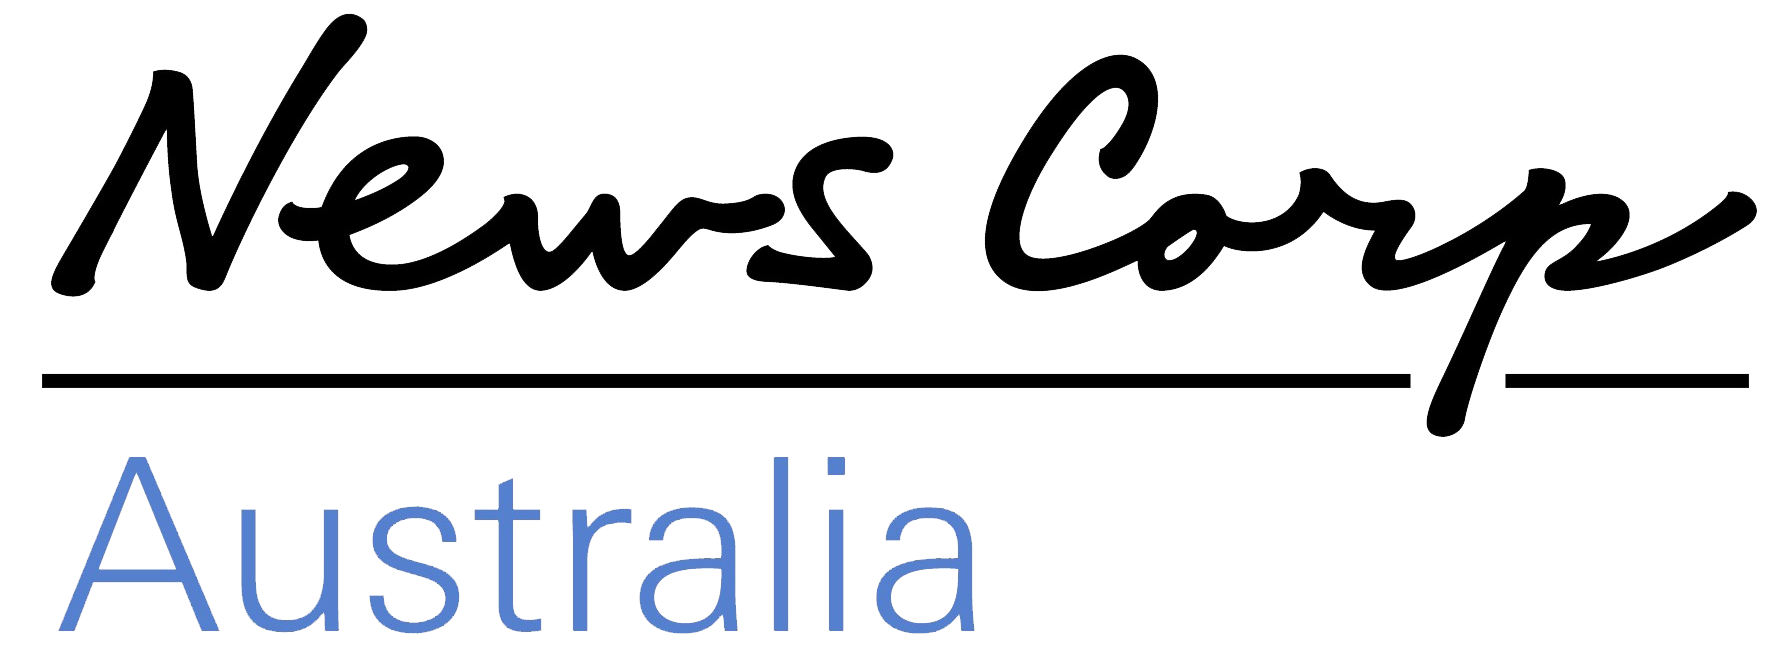 News Corp Australia